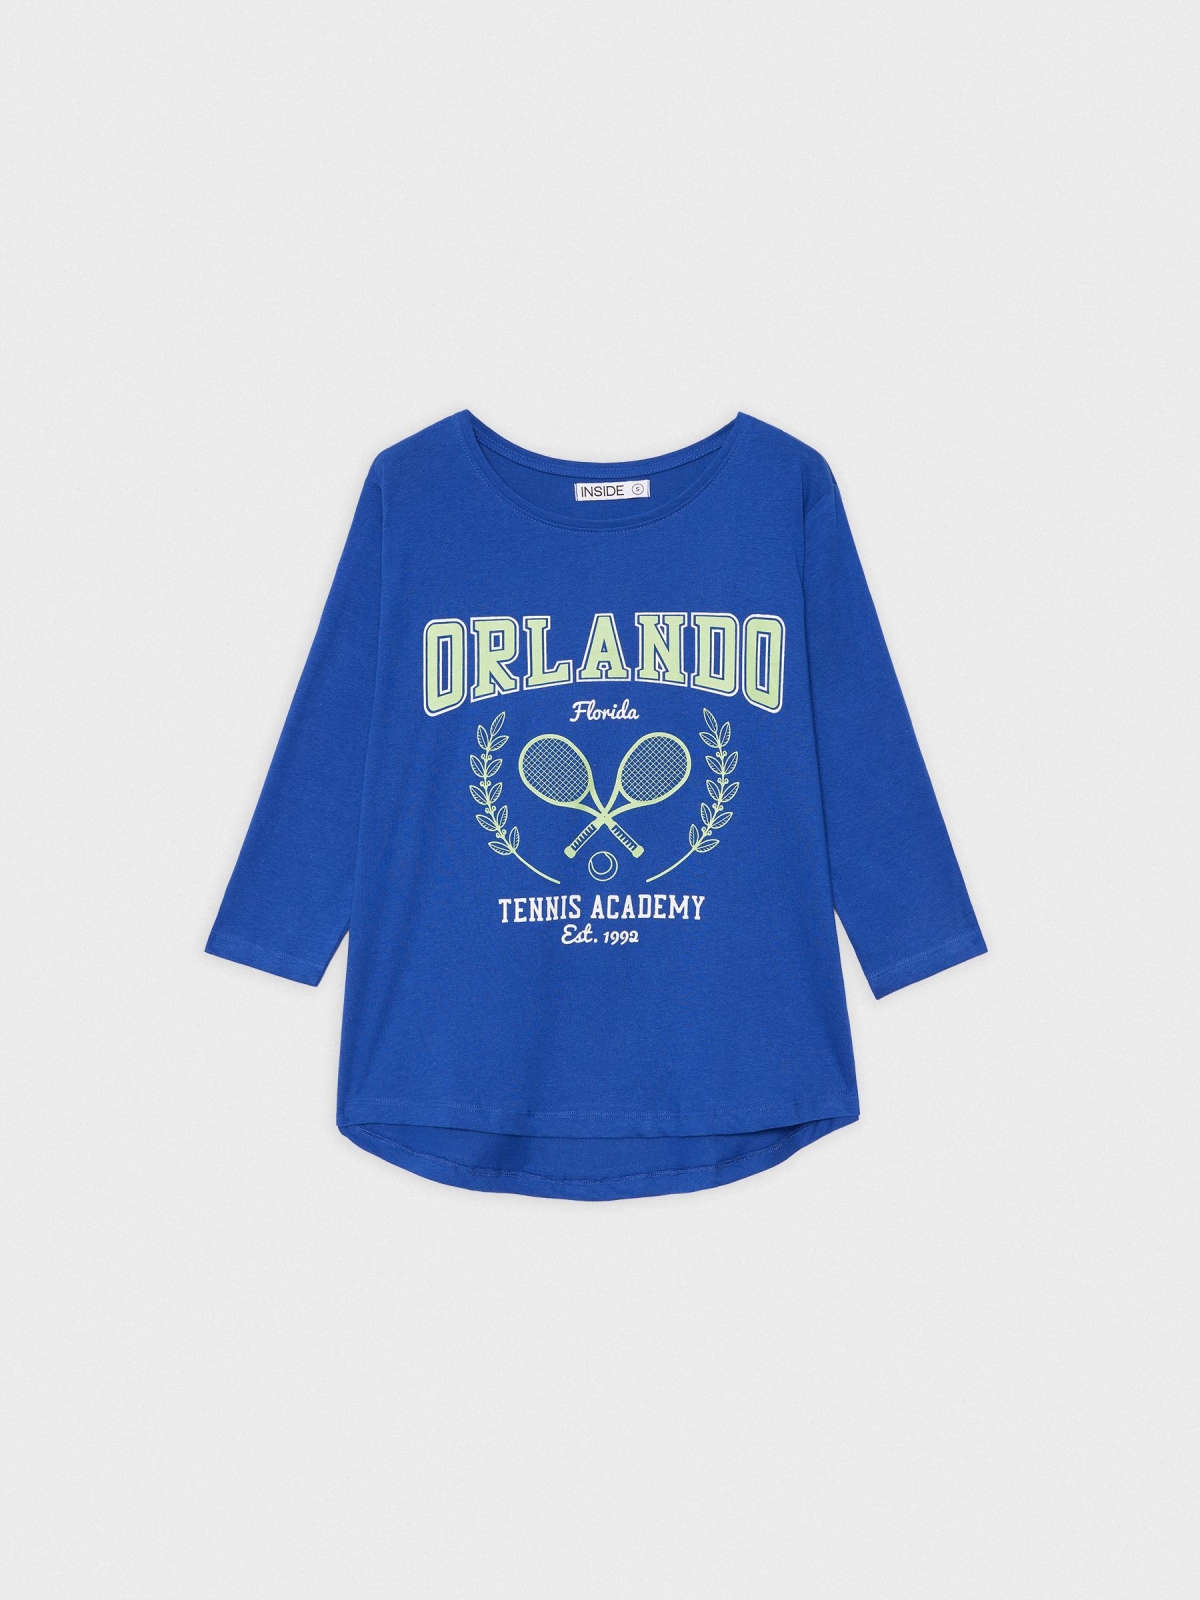  Camiseta Tennis Academy azul oscuro